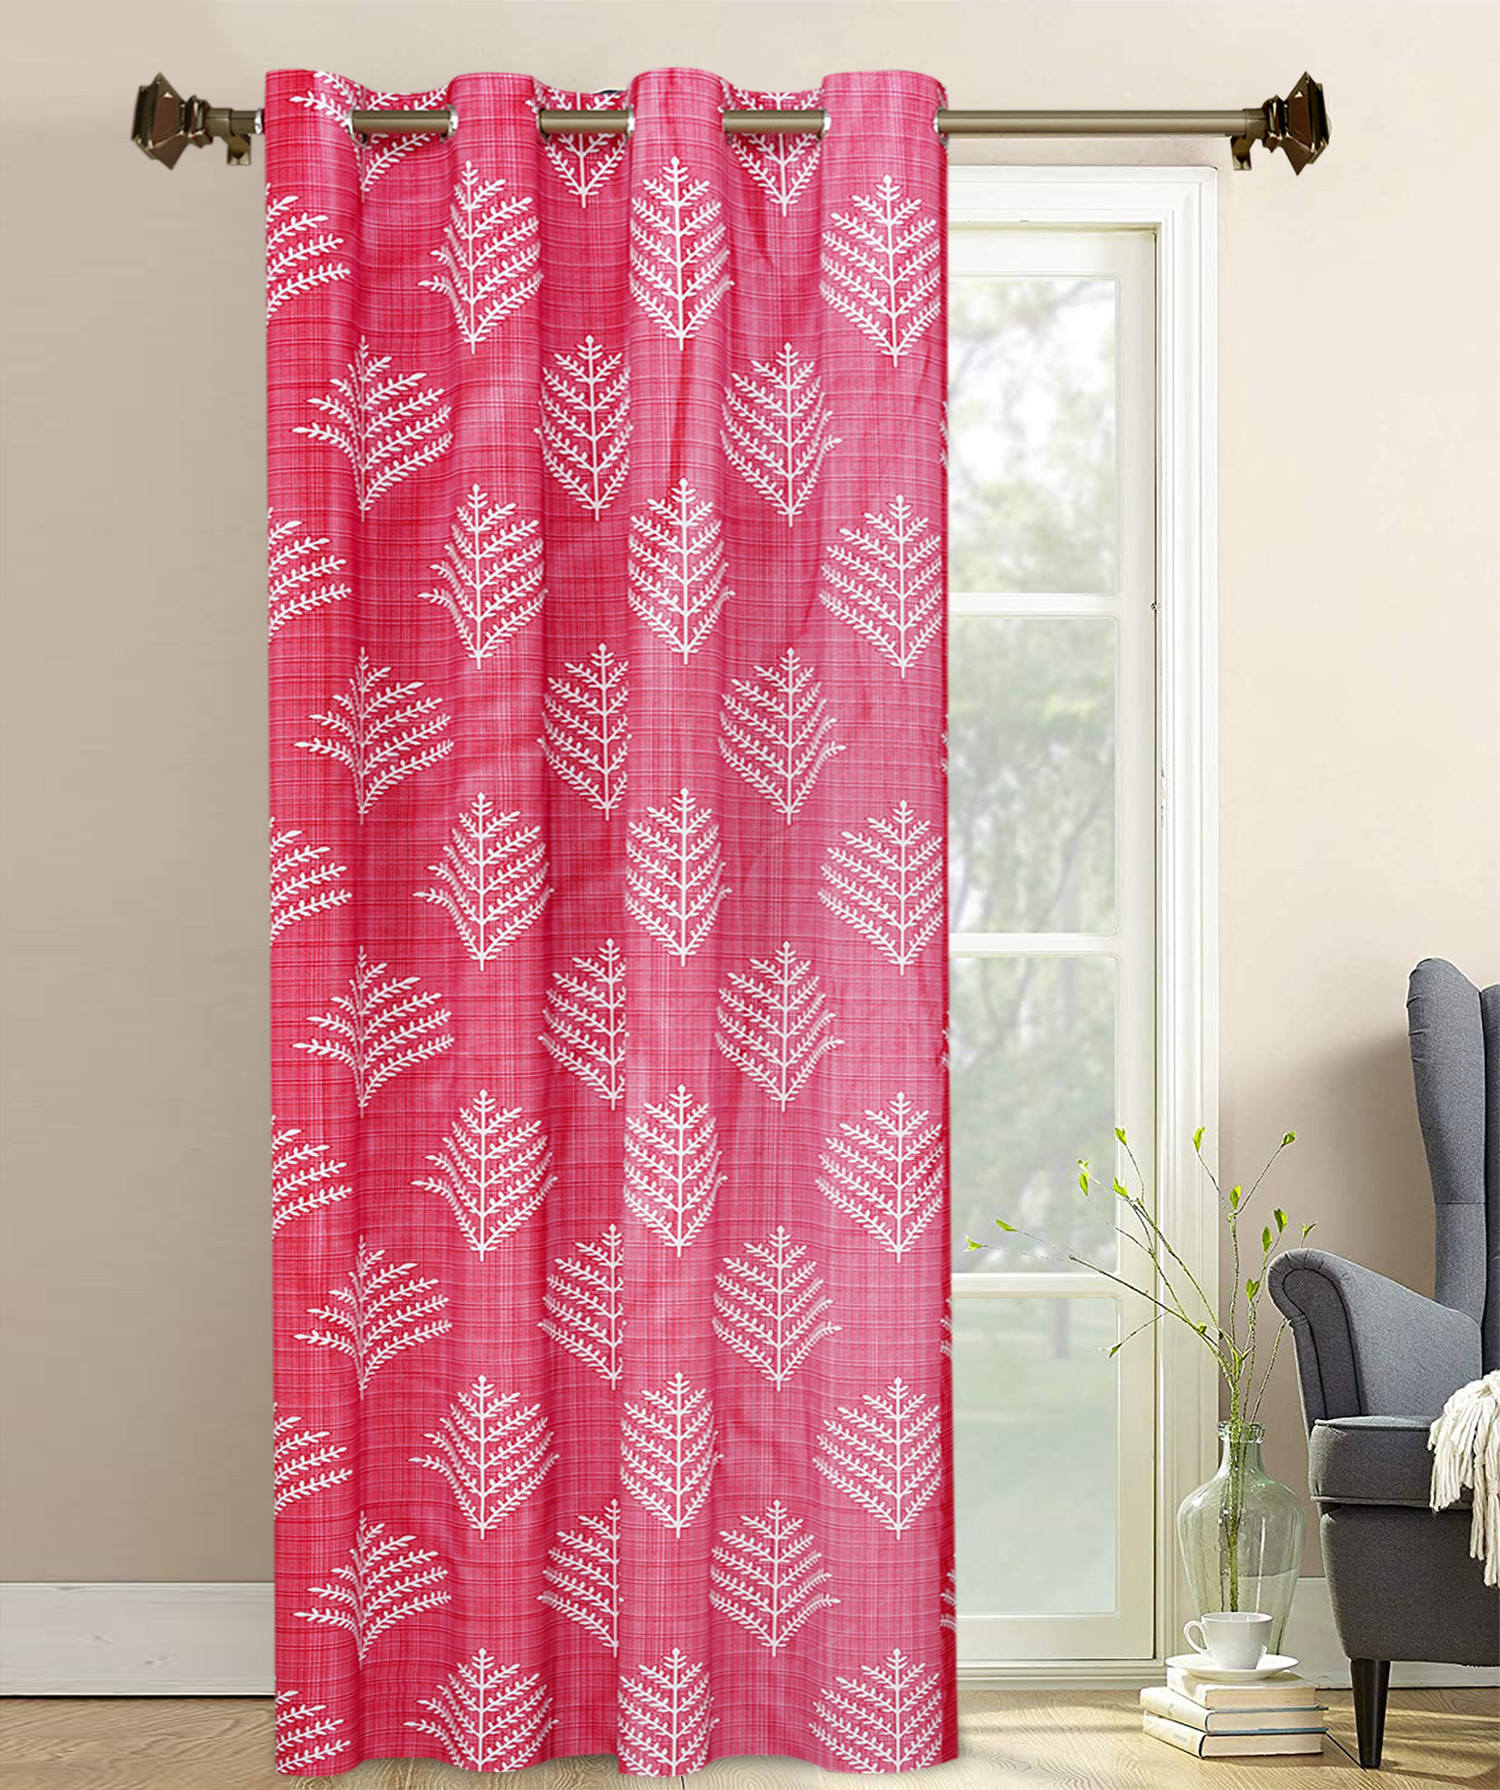 Kuber Industries Leaf Printed 7 Feet Door Curtain For Living Room, Bed Room, Kids Room With 8 Eyelet (Pink)-HS43KUBMART25585